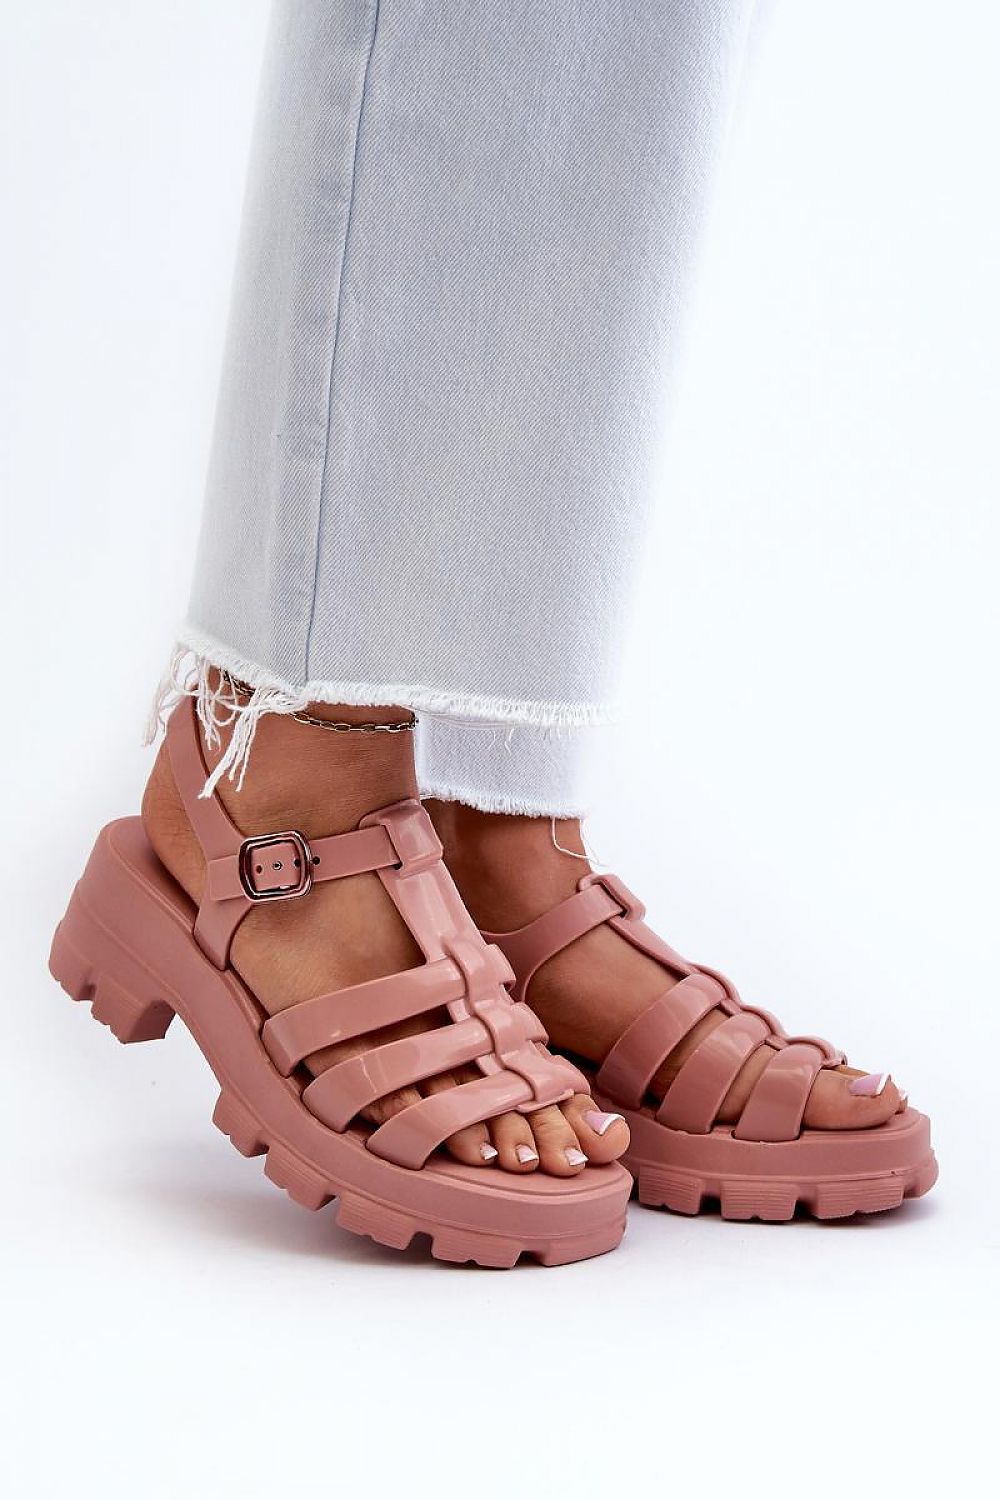 TEEK - Pink Raised Platform Gladiator Sandals SHOES TEEK MH 5.5  